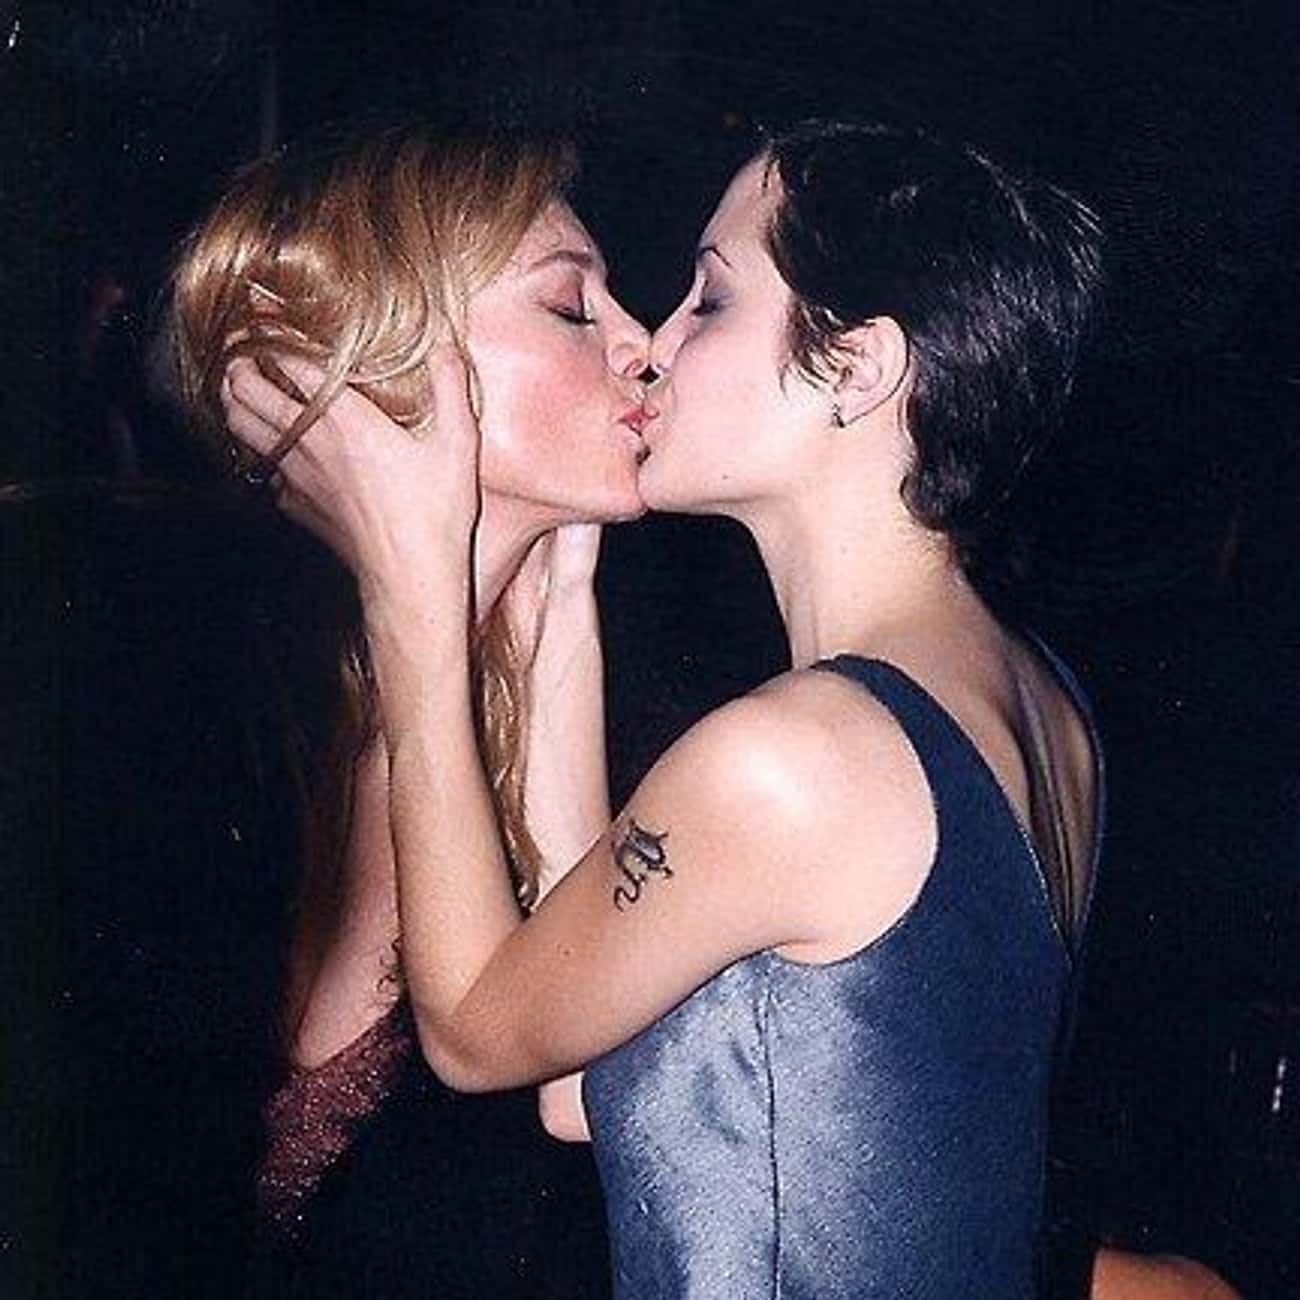 знаменитости лесбиянки и геи фото 106